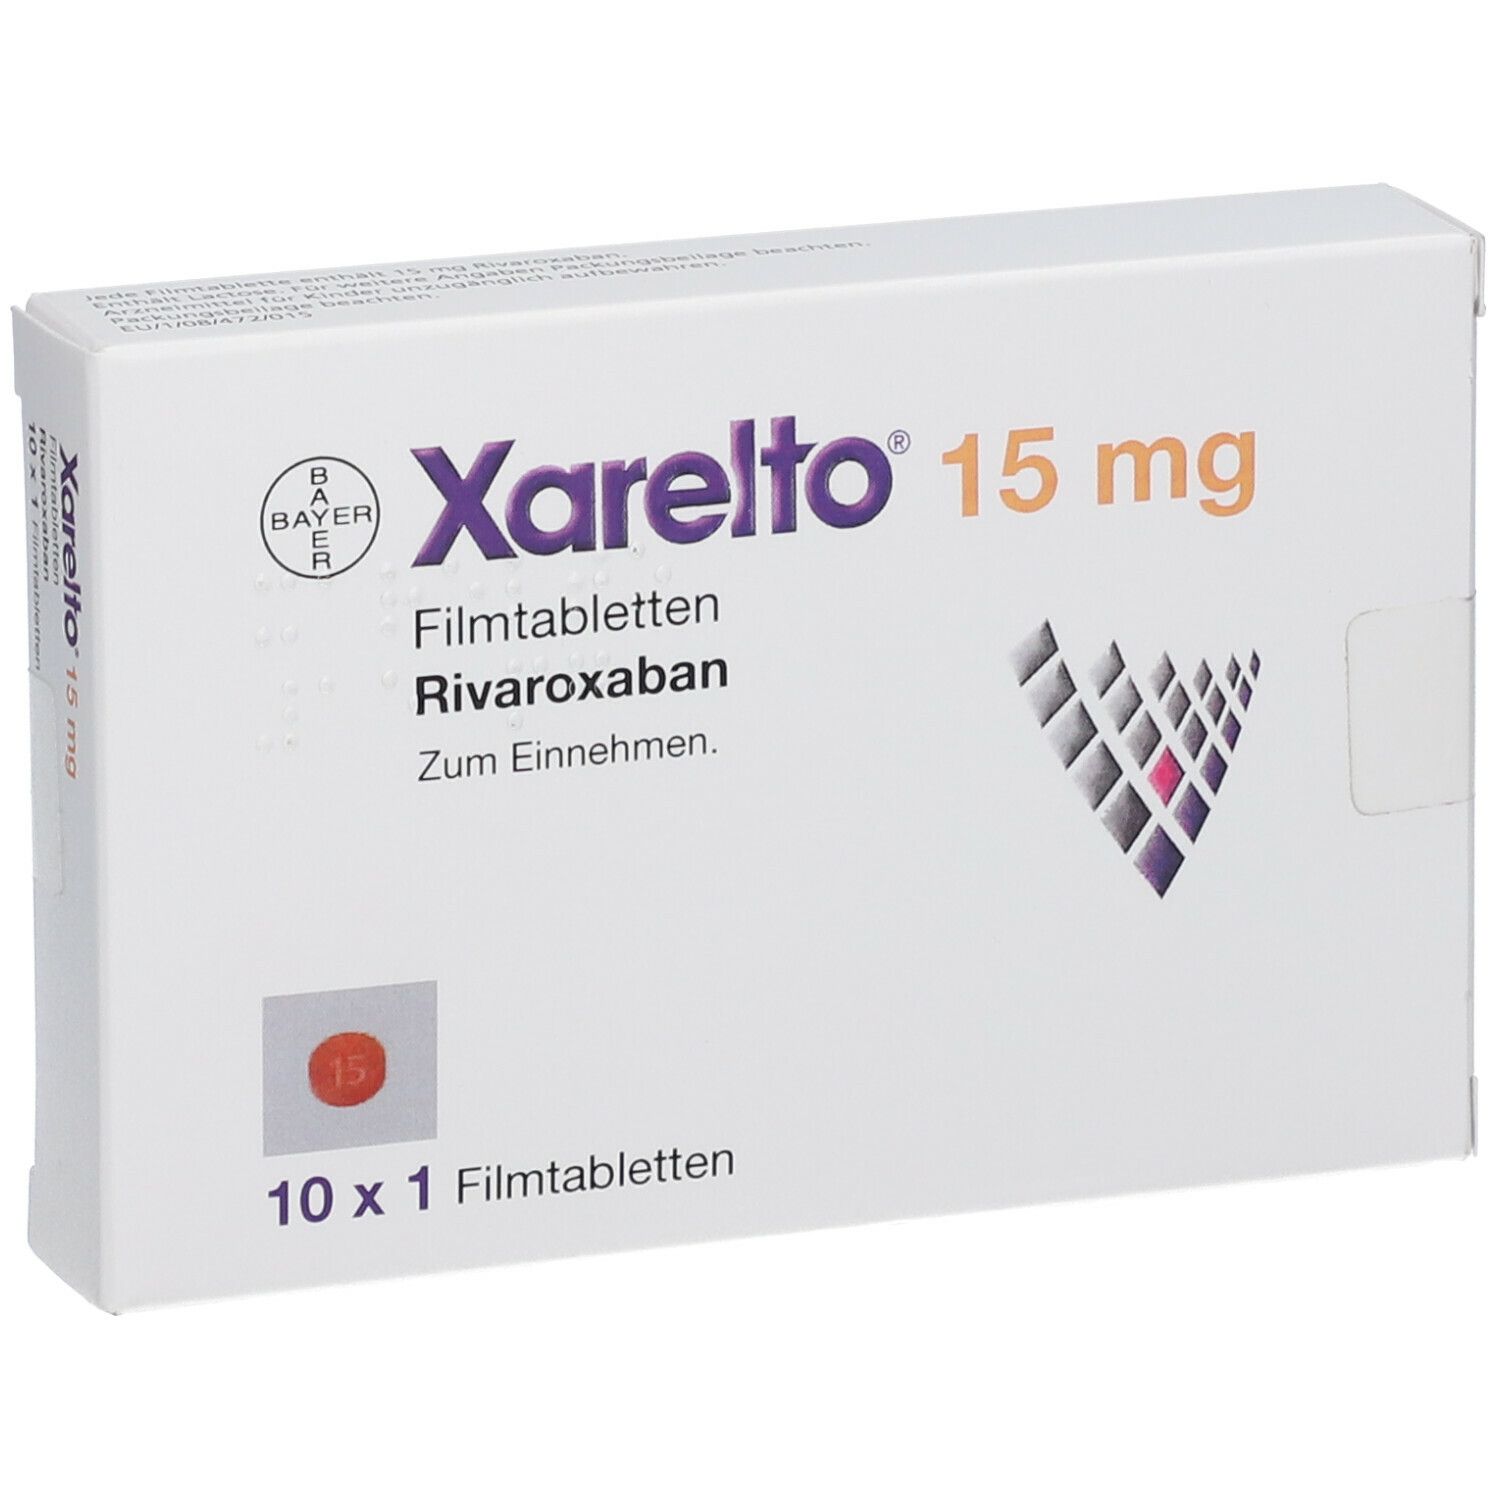 XARELTO 15 mg Filmtabletten